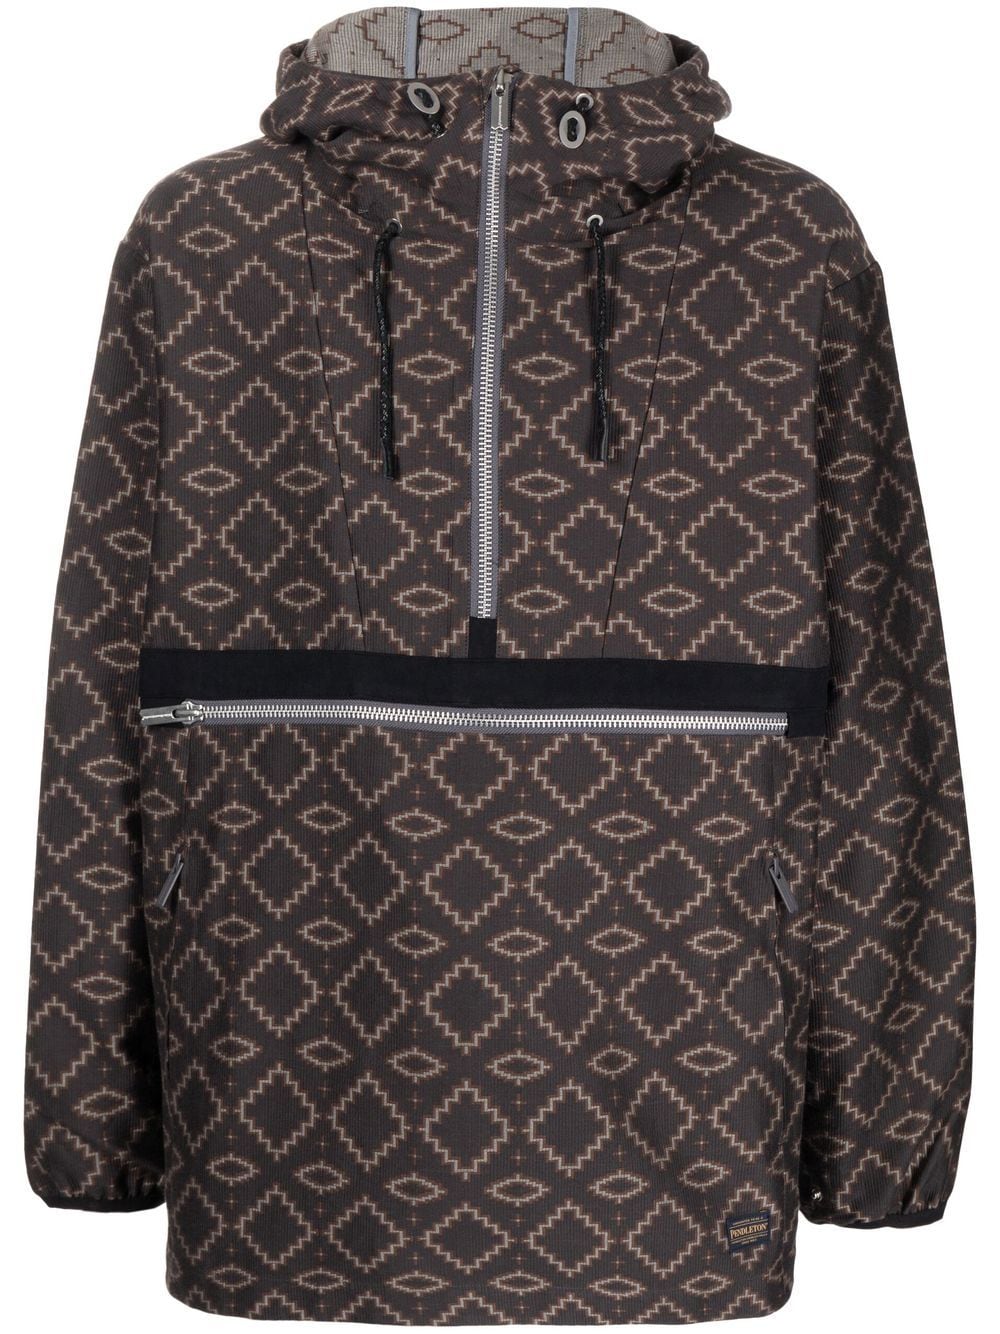 White Mountaineering geometric pattern half-zipped jacket - Brown von White Mountaineering